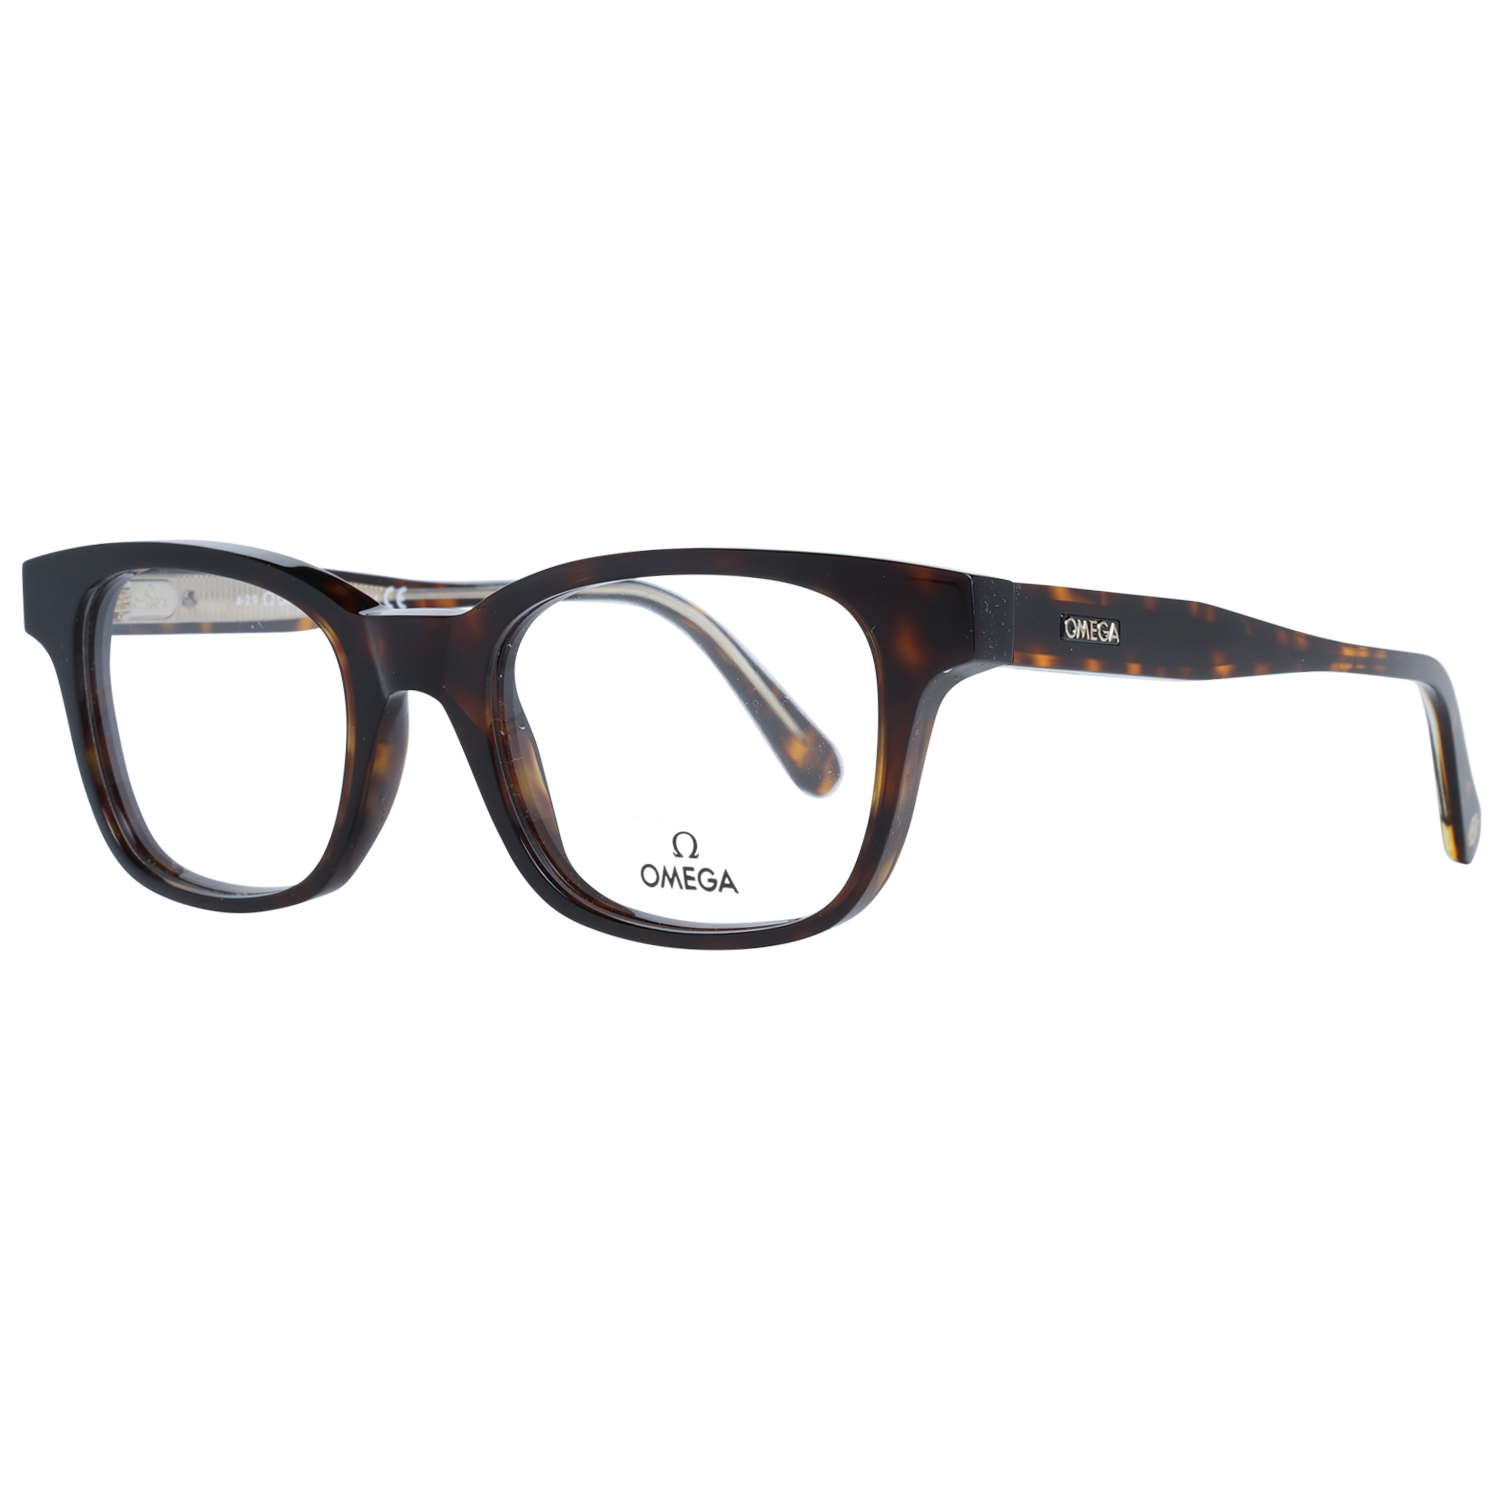 Omega Frames Omega Optical Frame OM5004-H 052 52 Eyeglasses Eyewear UK USA Australia 